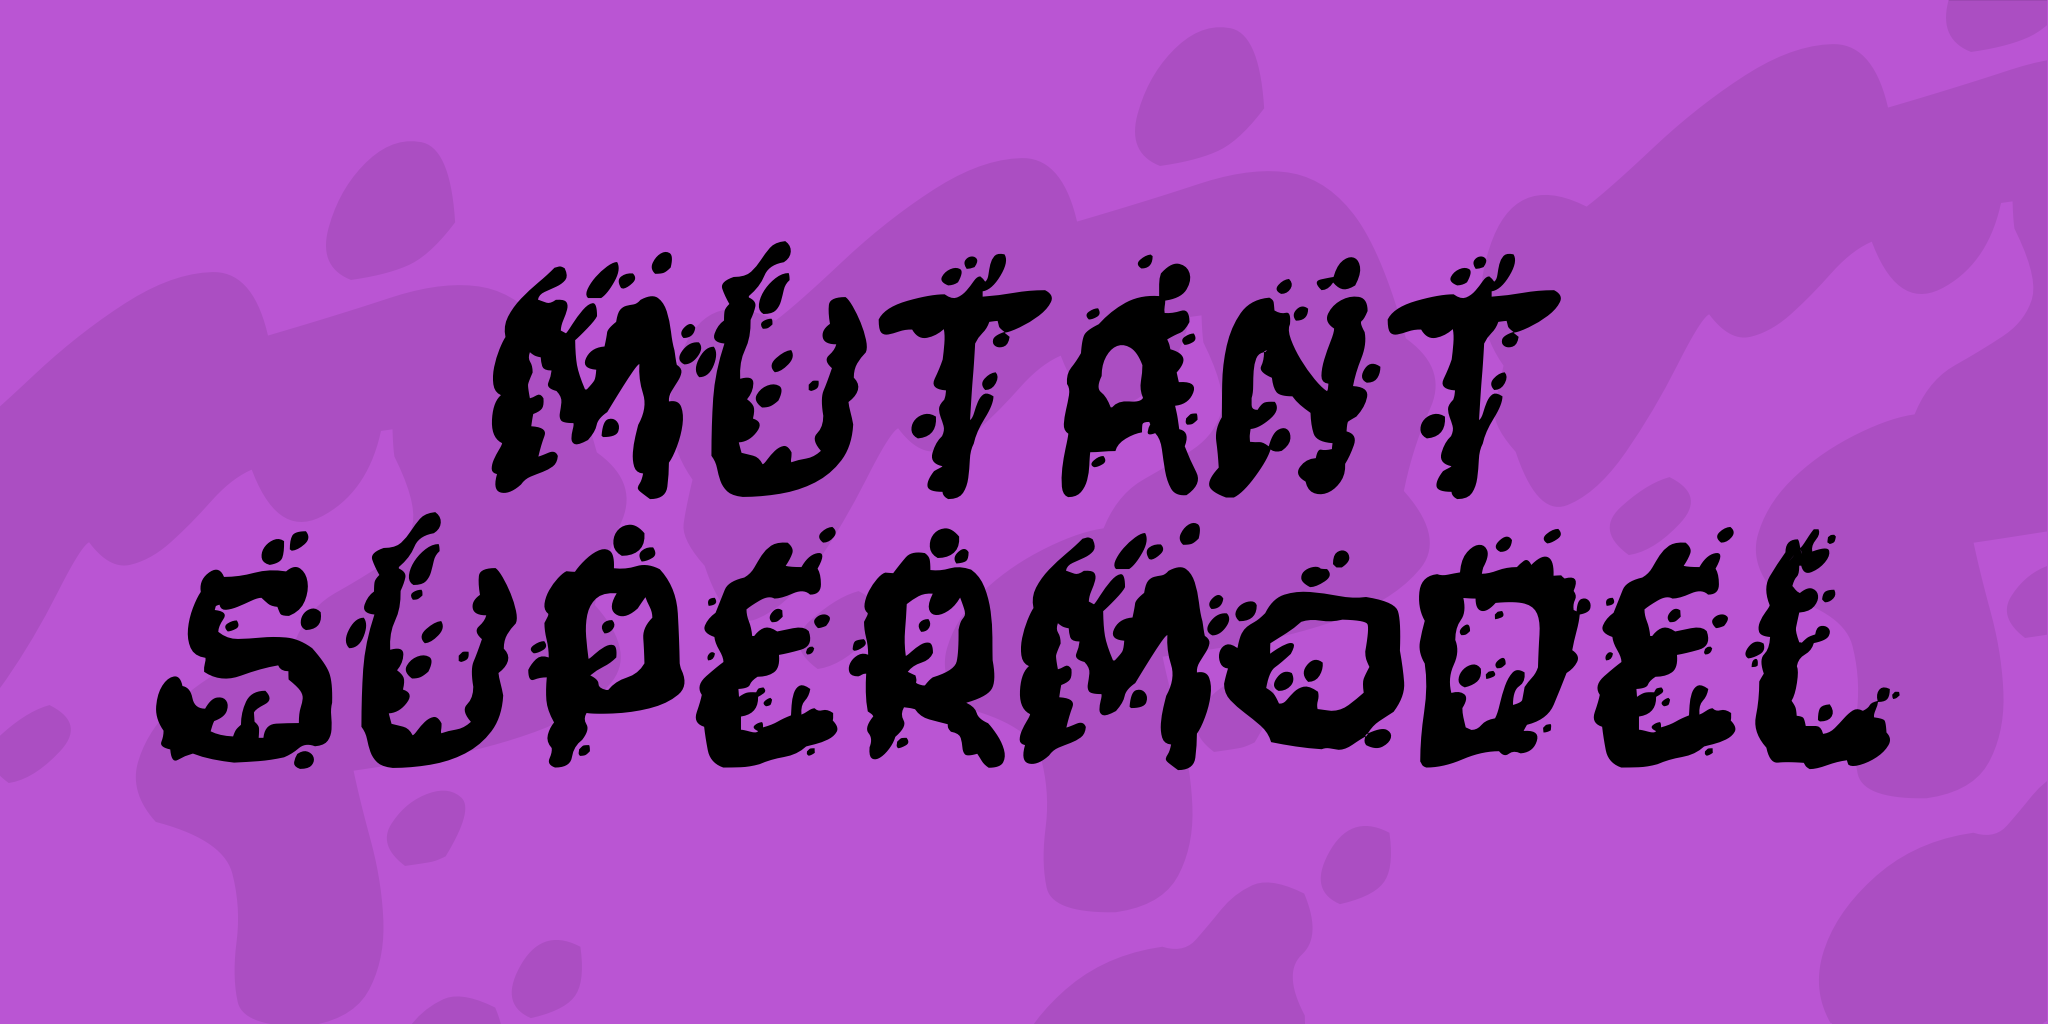 Mutant Supermodel